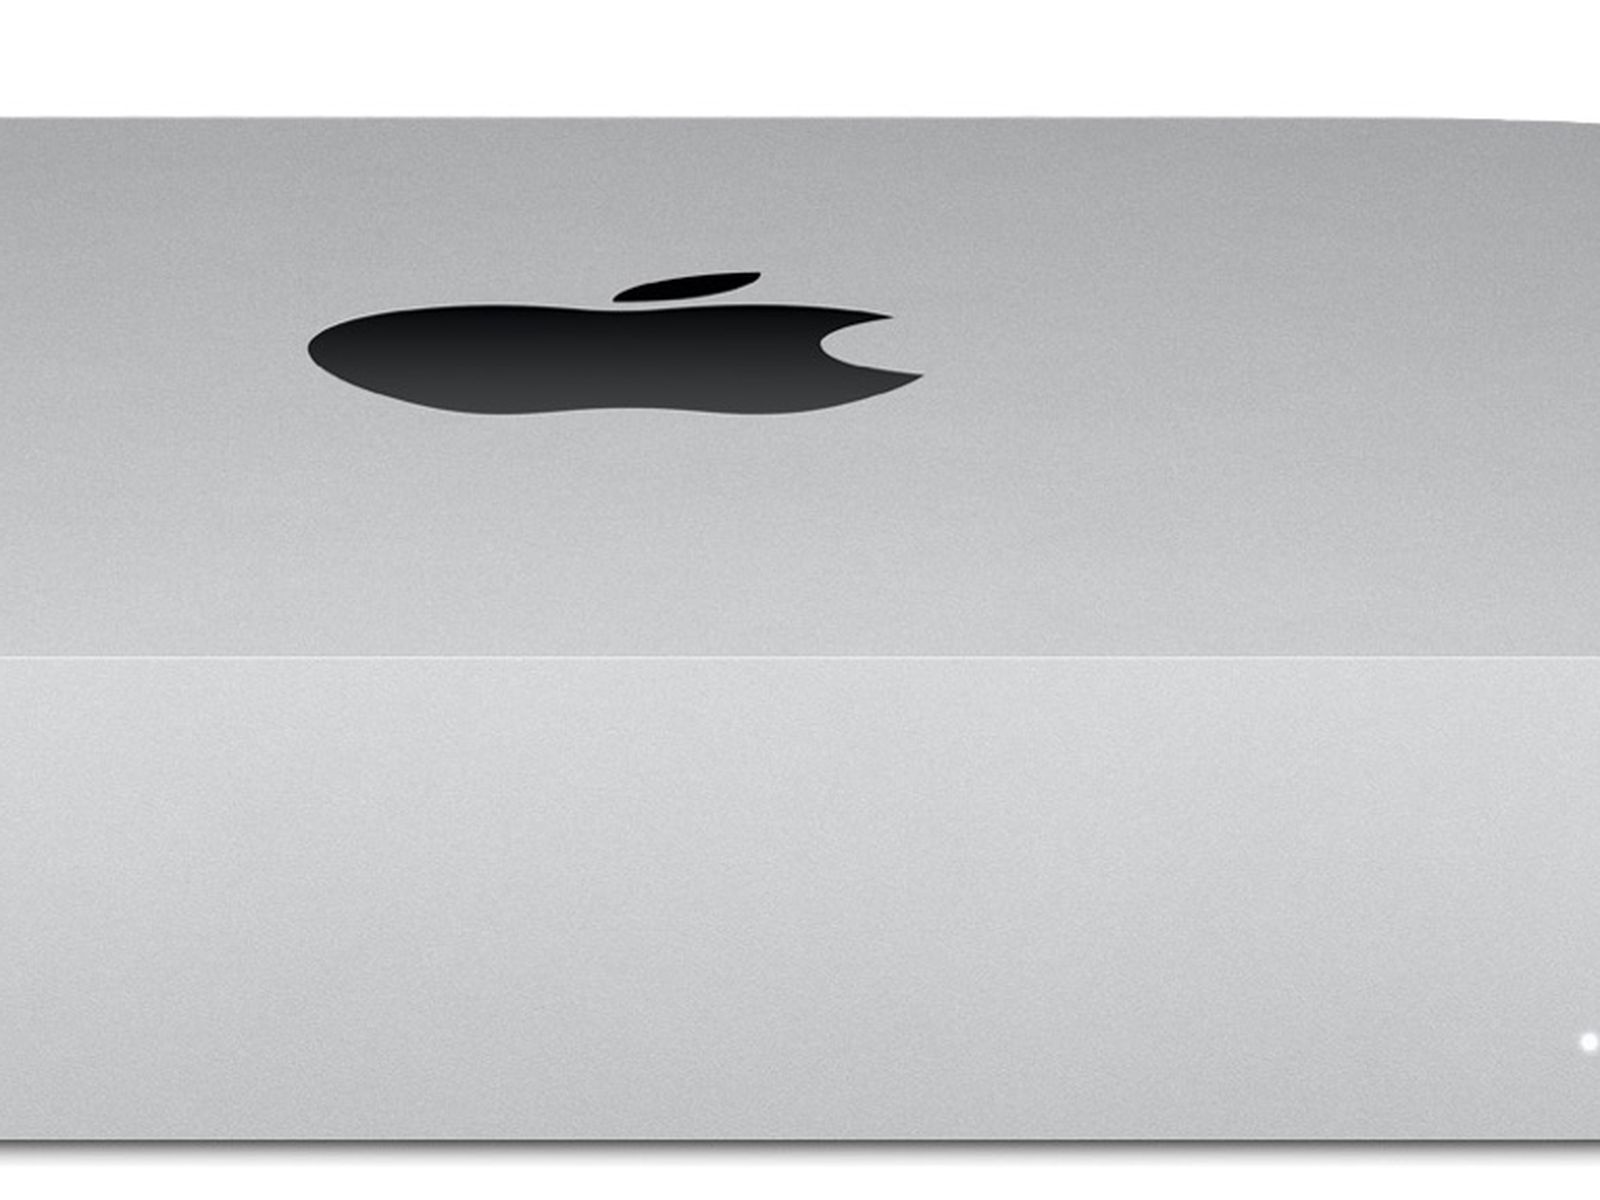 Mac mini: Apple M1 Chip and Intel Options, Starts at $699